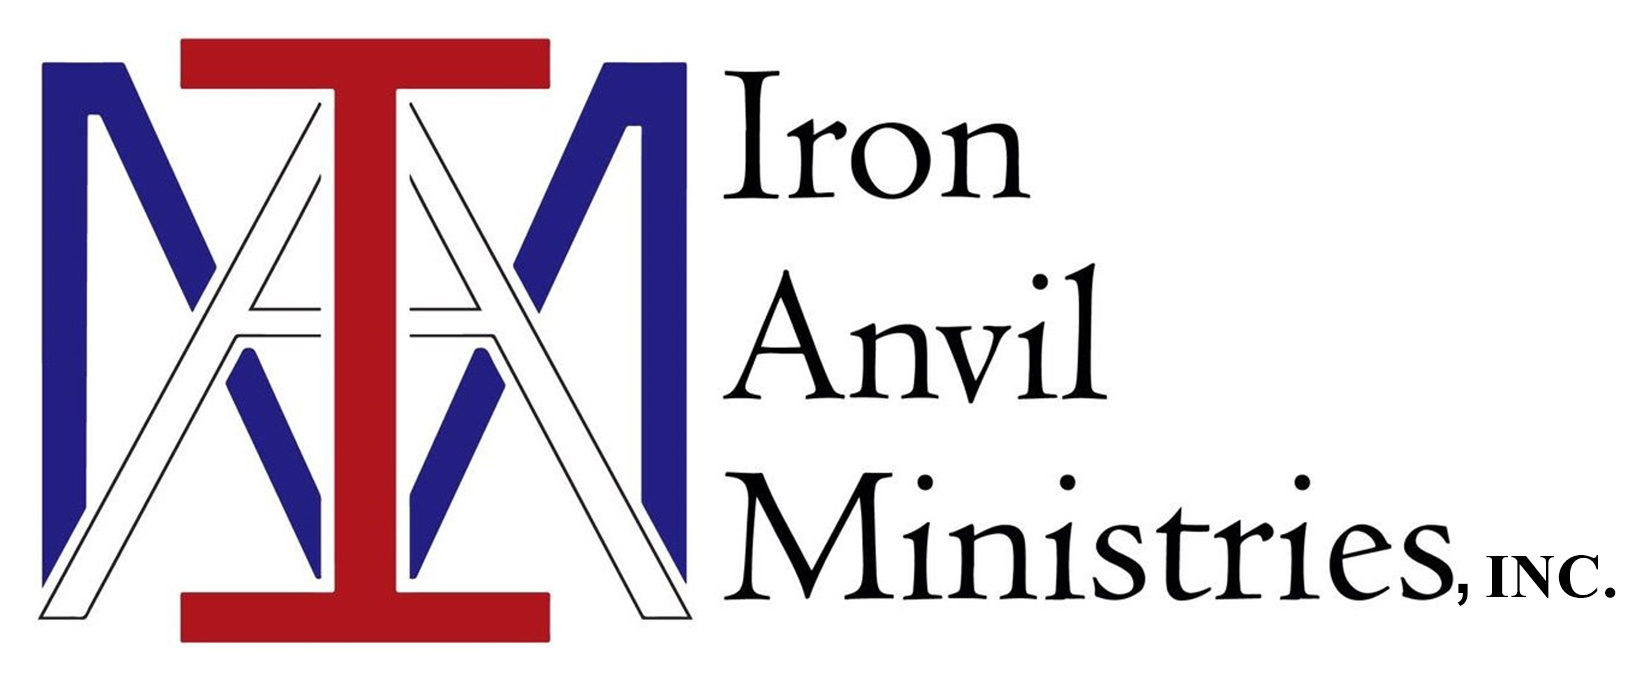 Iron Anvil Ministries